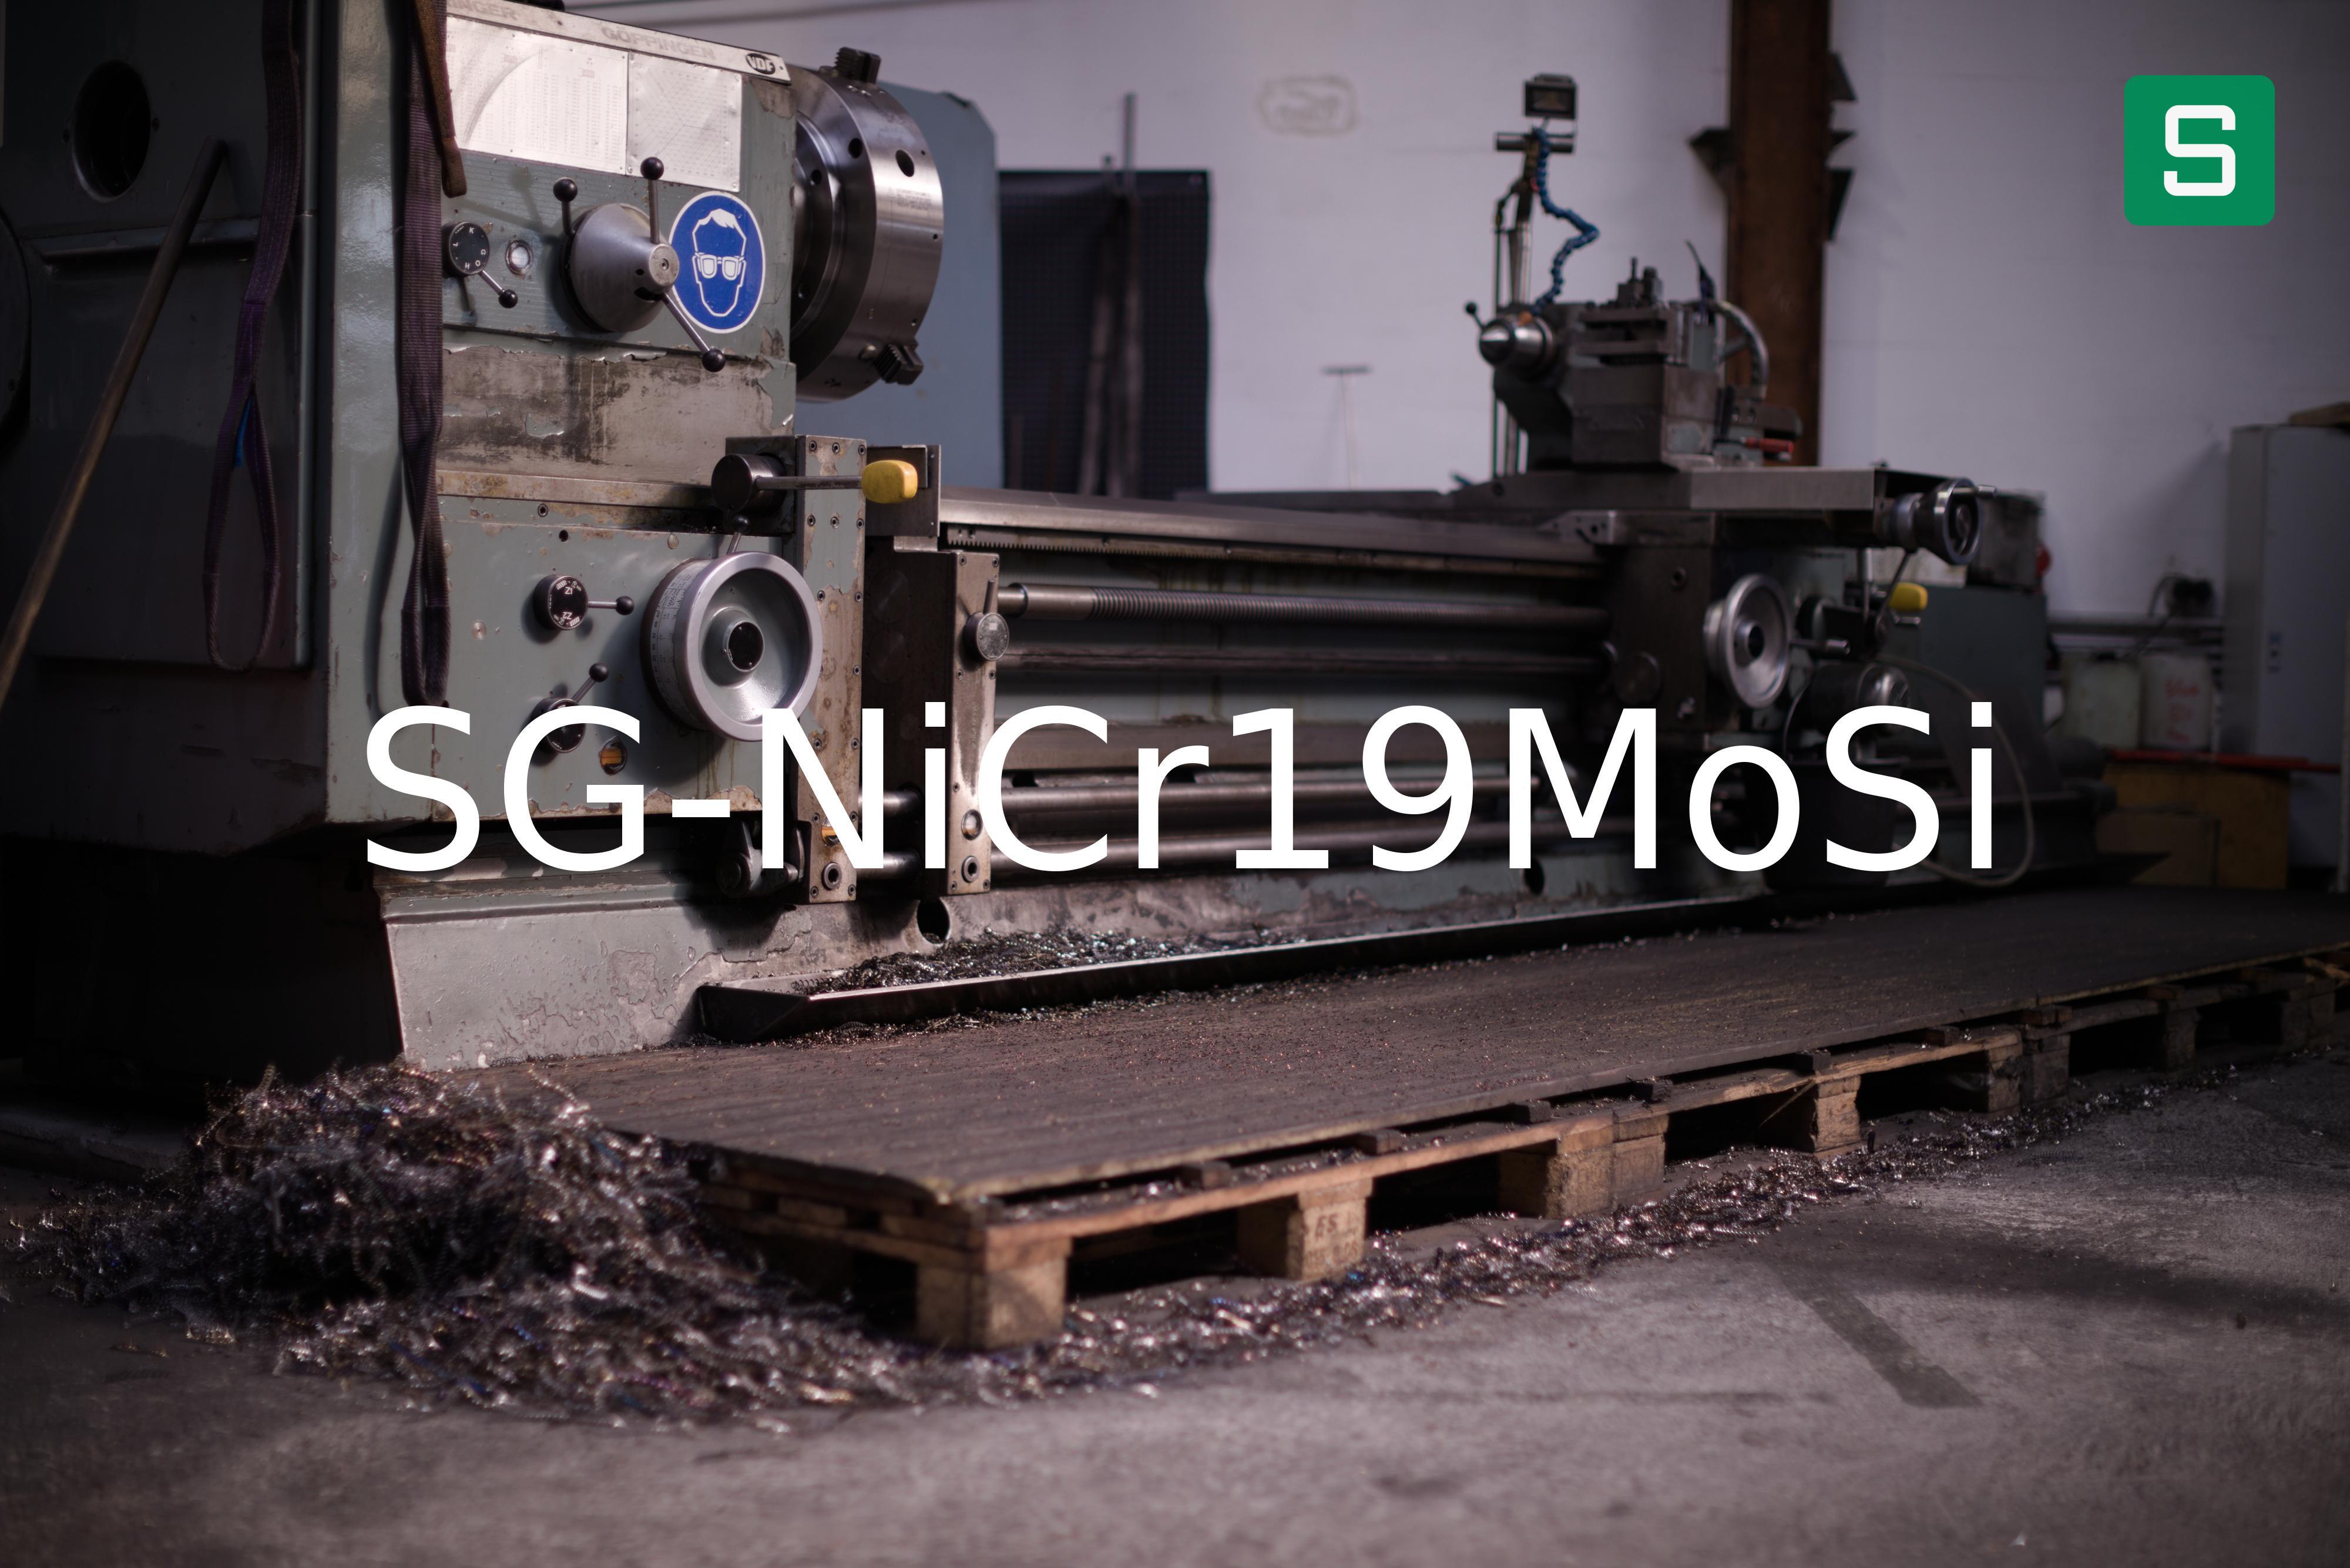 Steel Material: SG-NiCr19MoSi